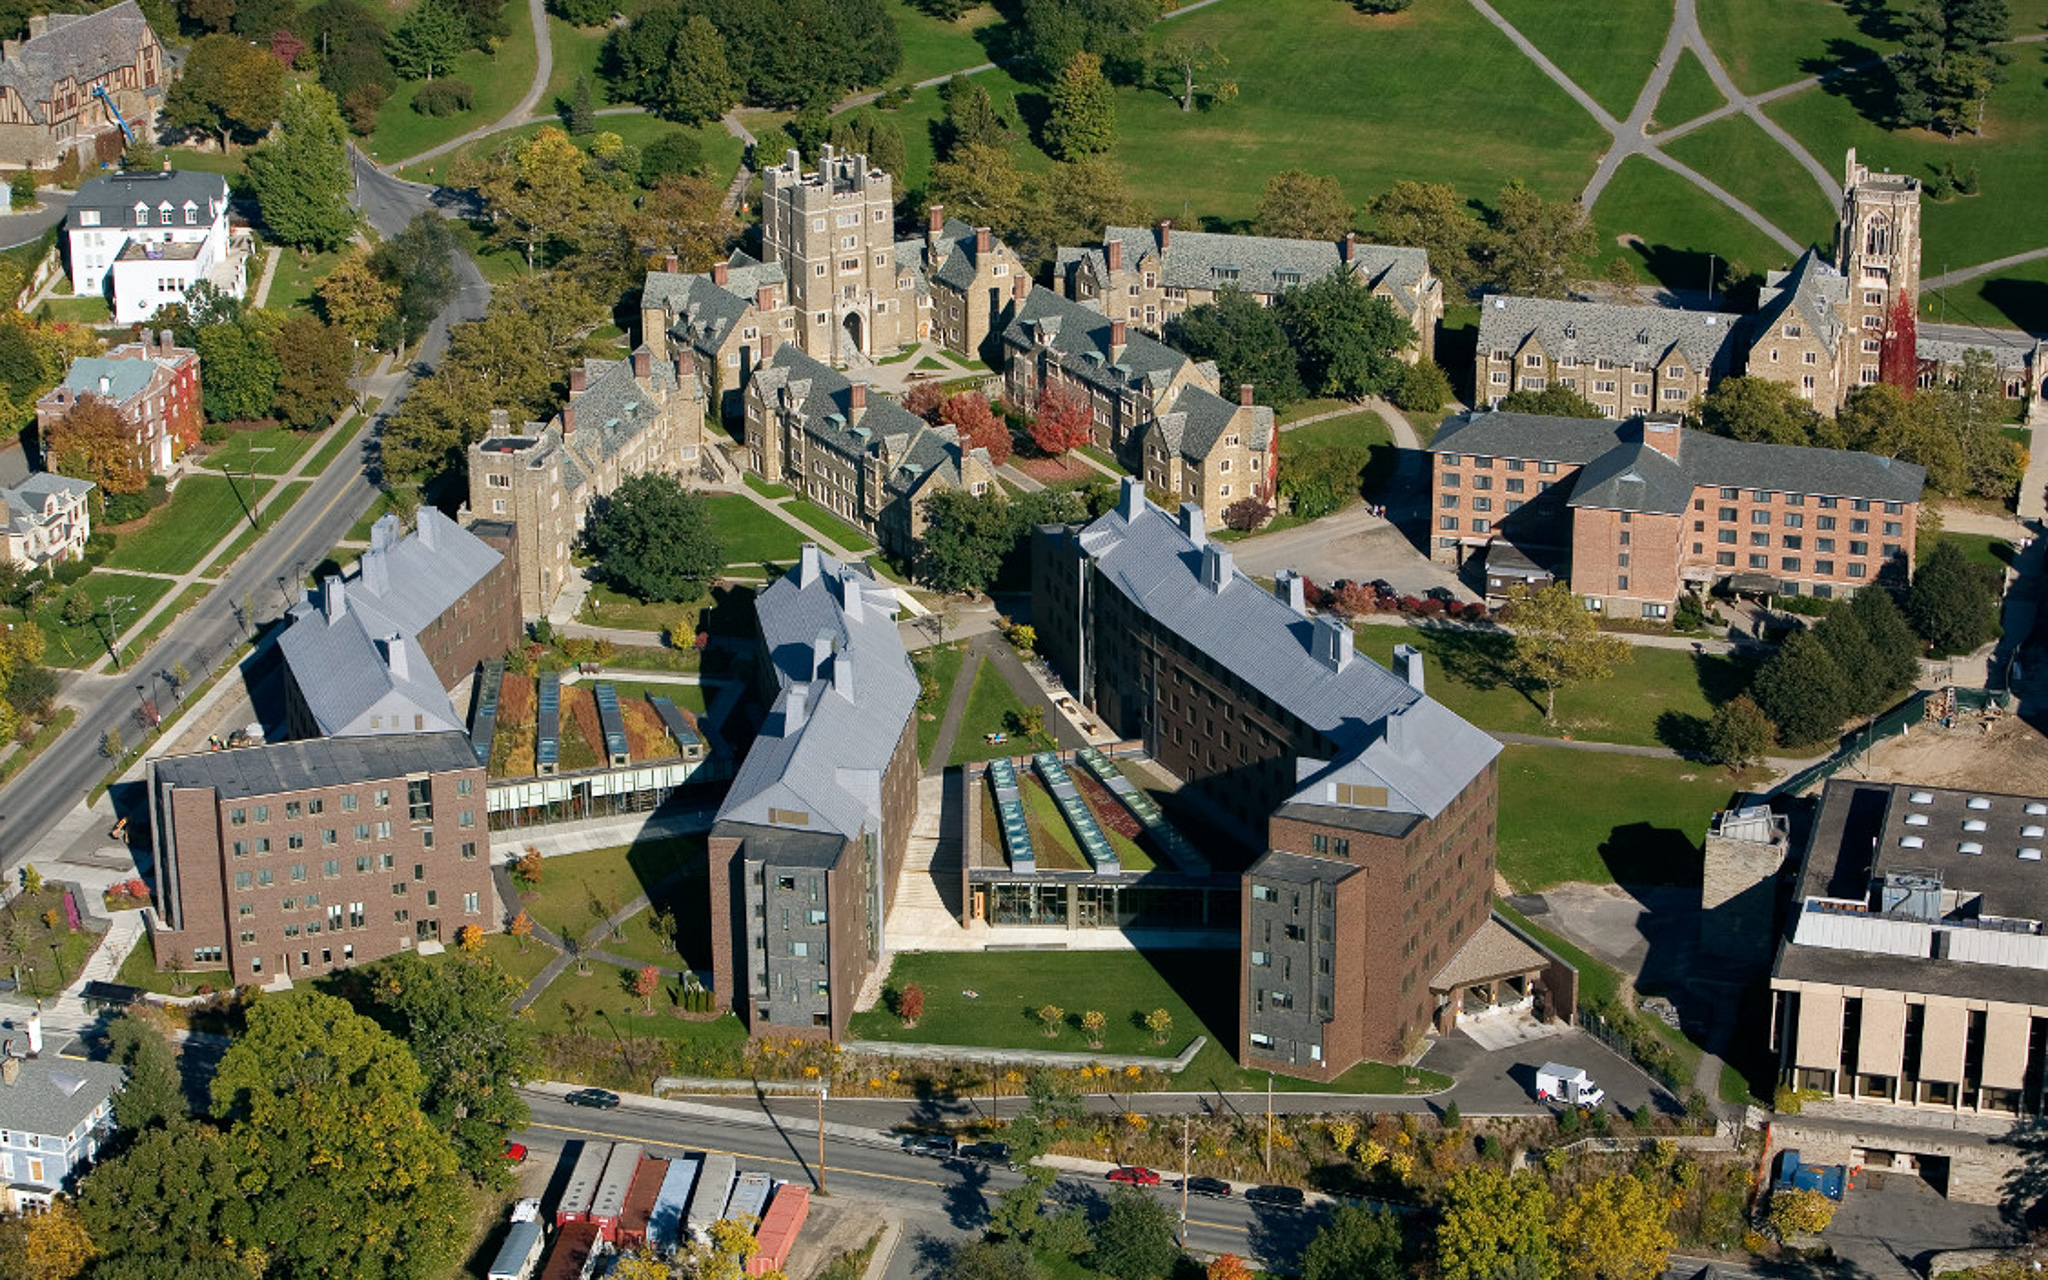 West Campus Aerial View